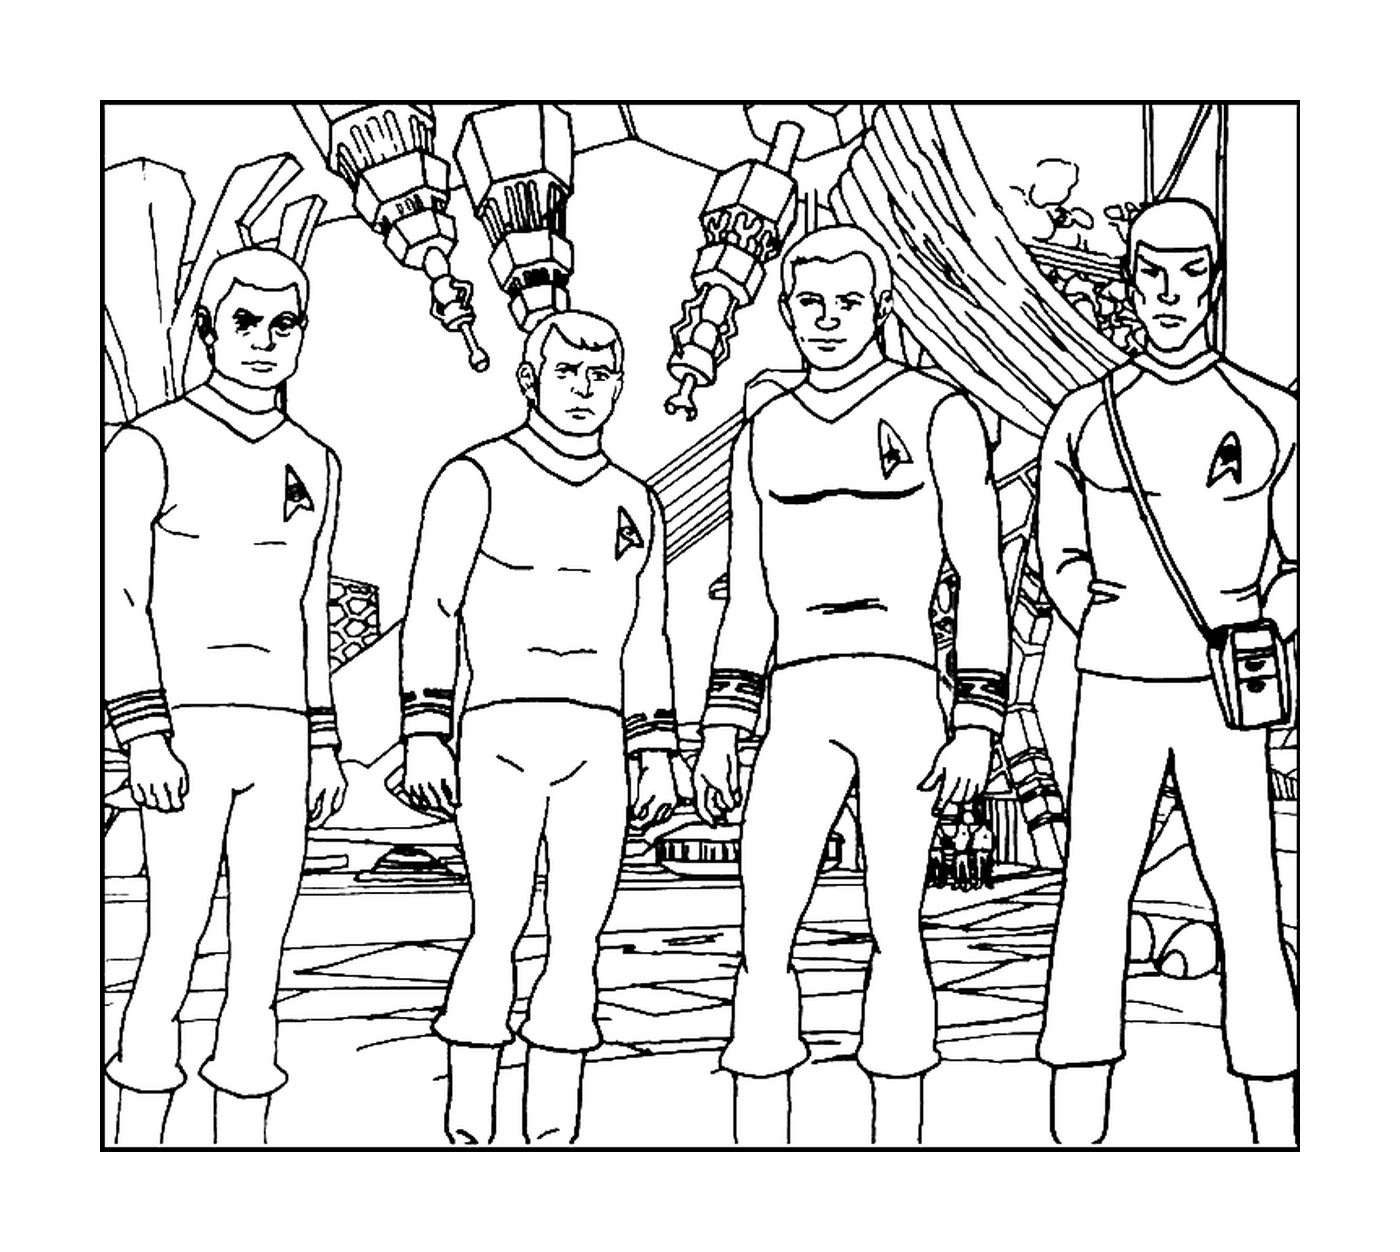  The Enterprise's crew 